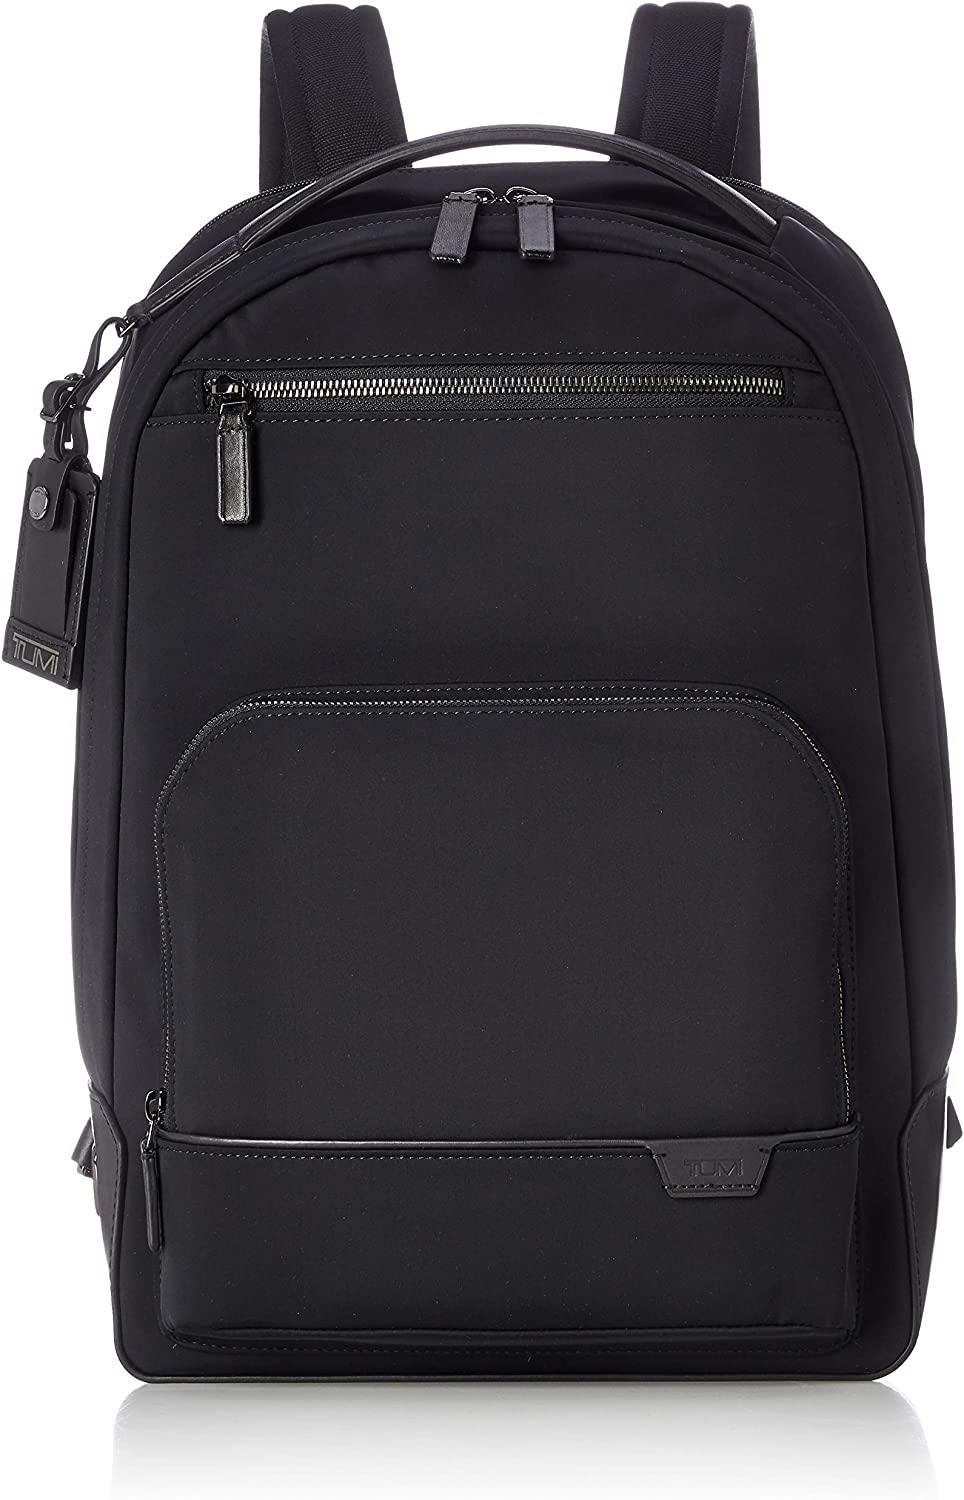 TUMI - Harrison Warren Laptop Backpack - 15 Inch Computer Bag for Men and Women - Black